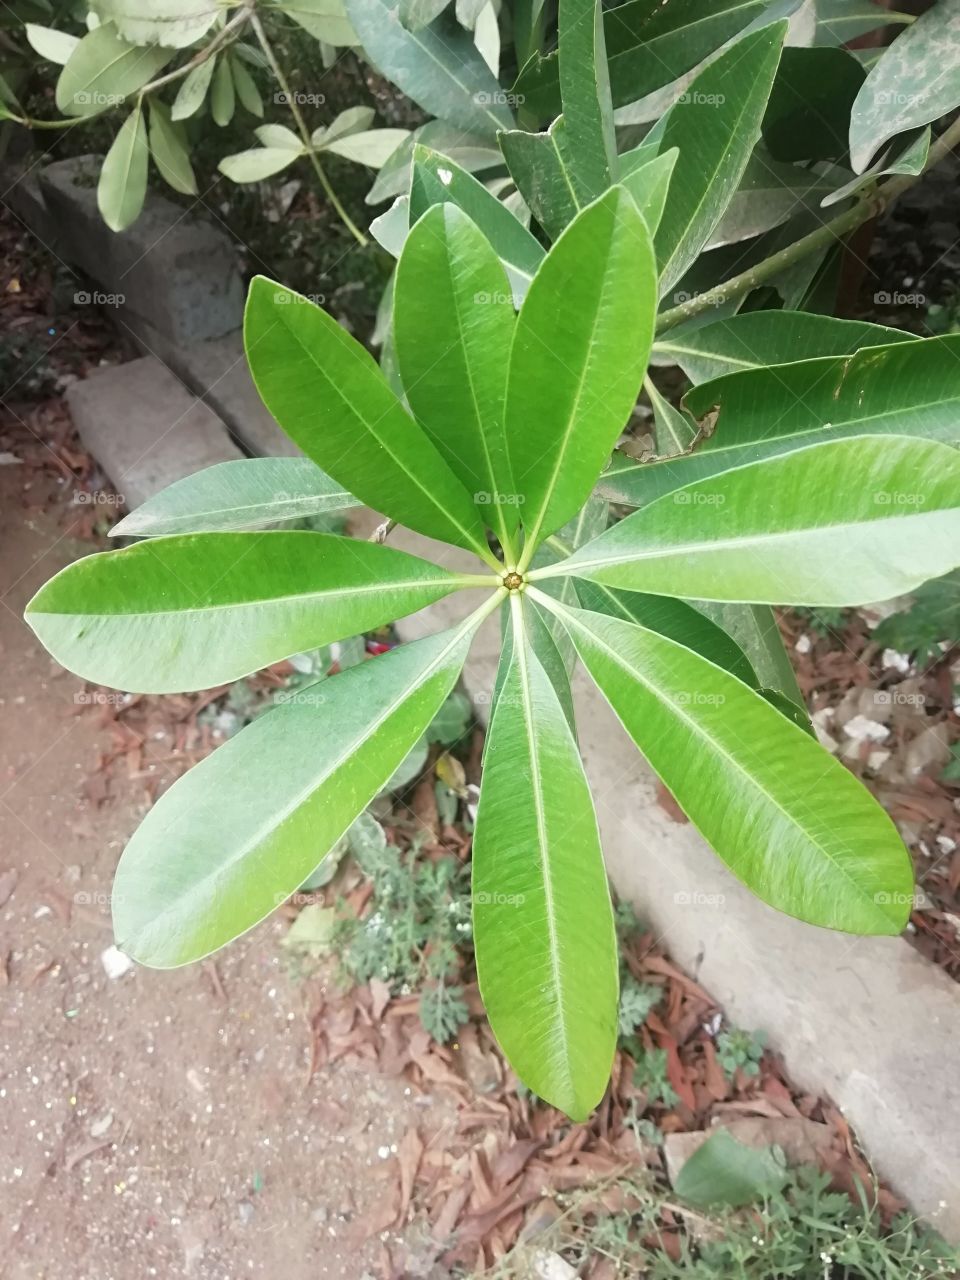 Flower shaped fresh leafs of a tree